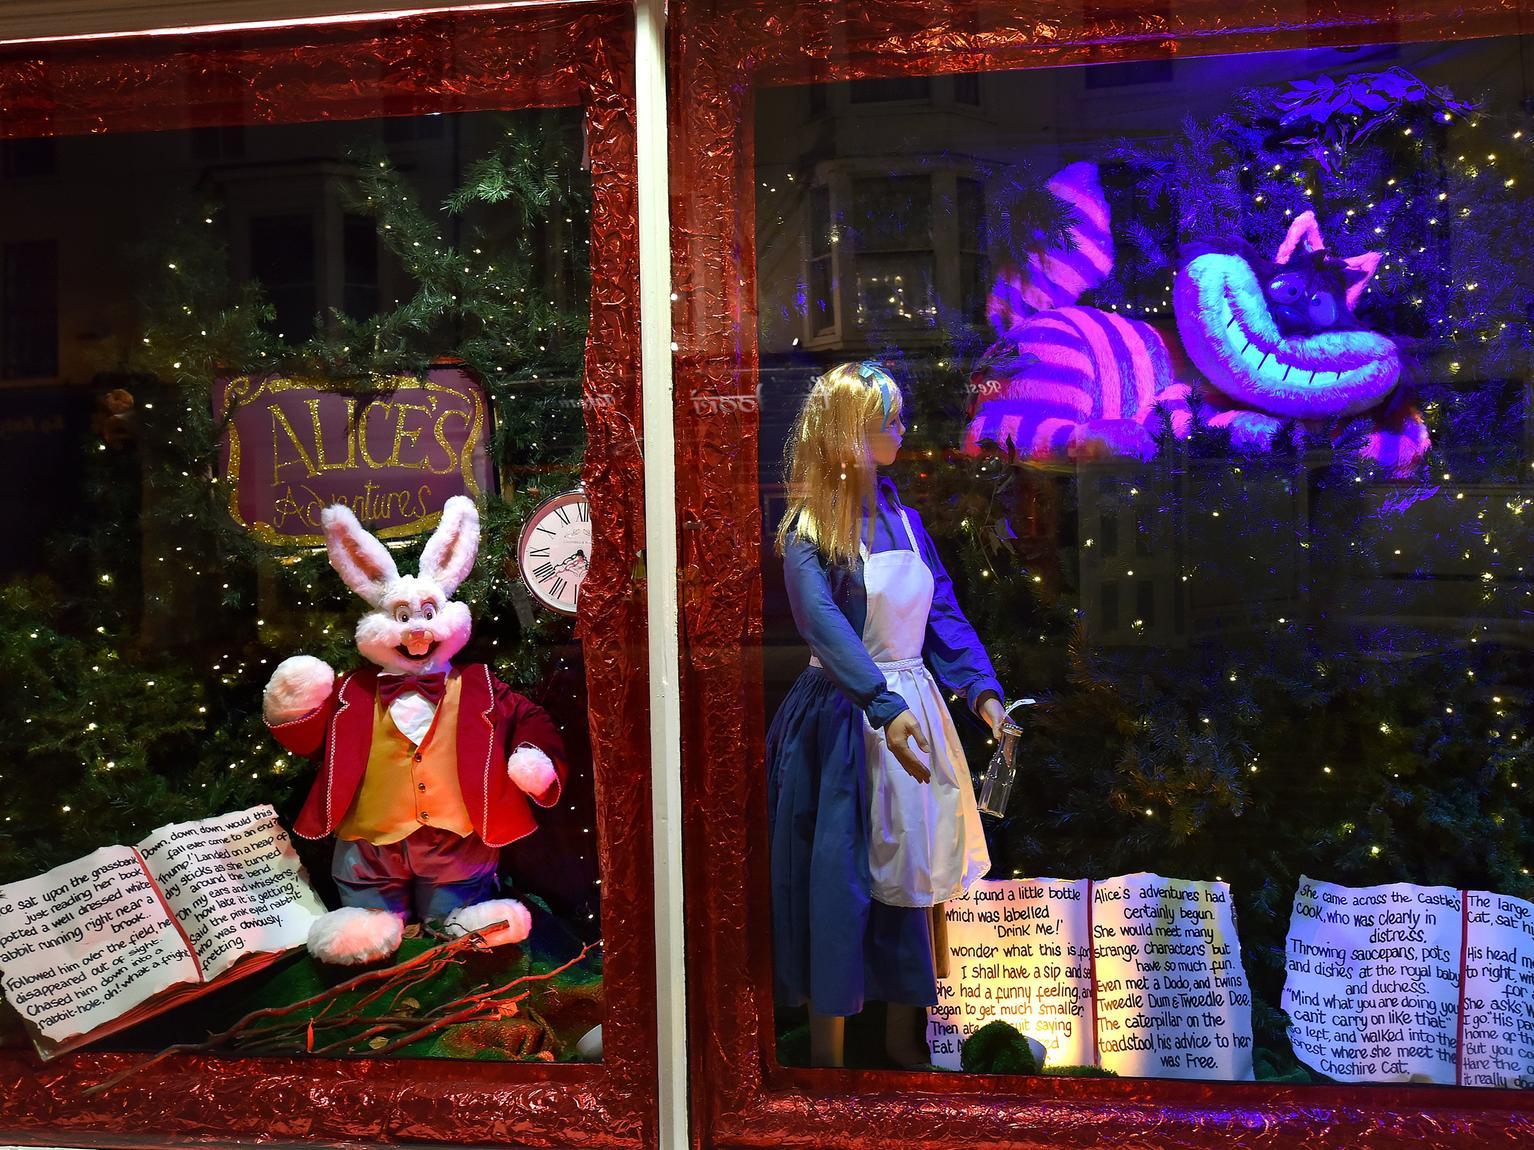 Alice's wonderland was recreated in 2018.